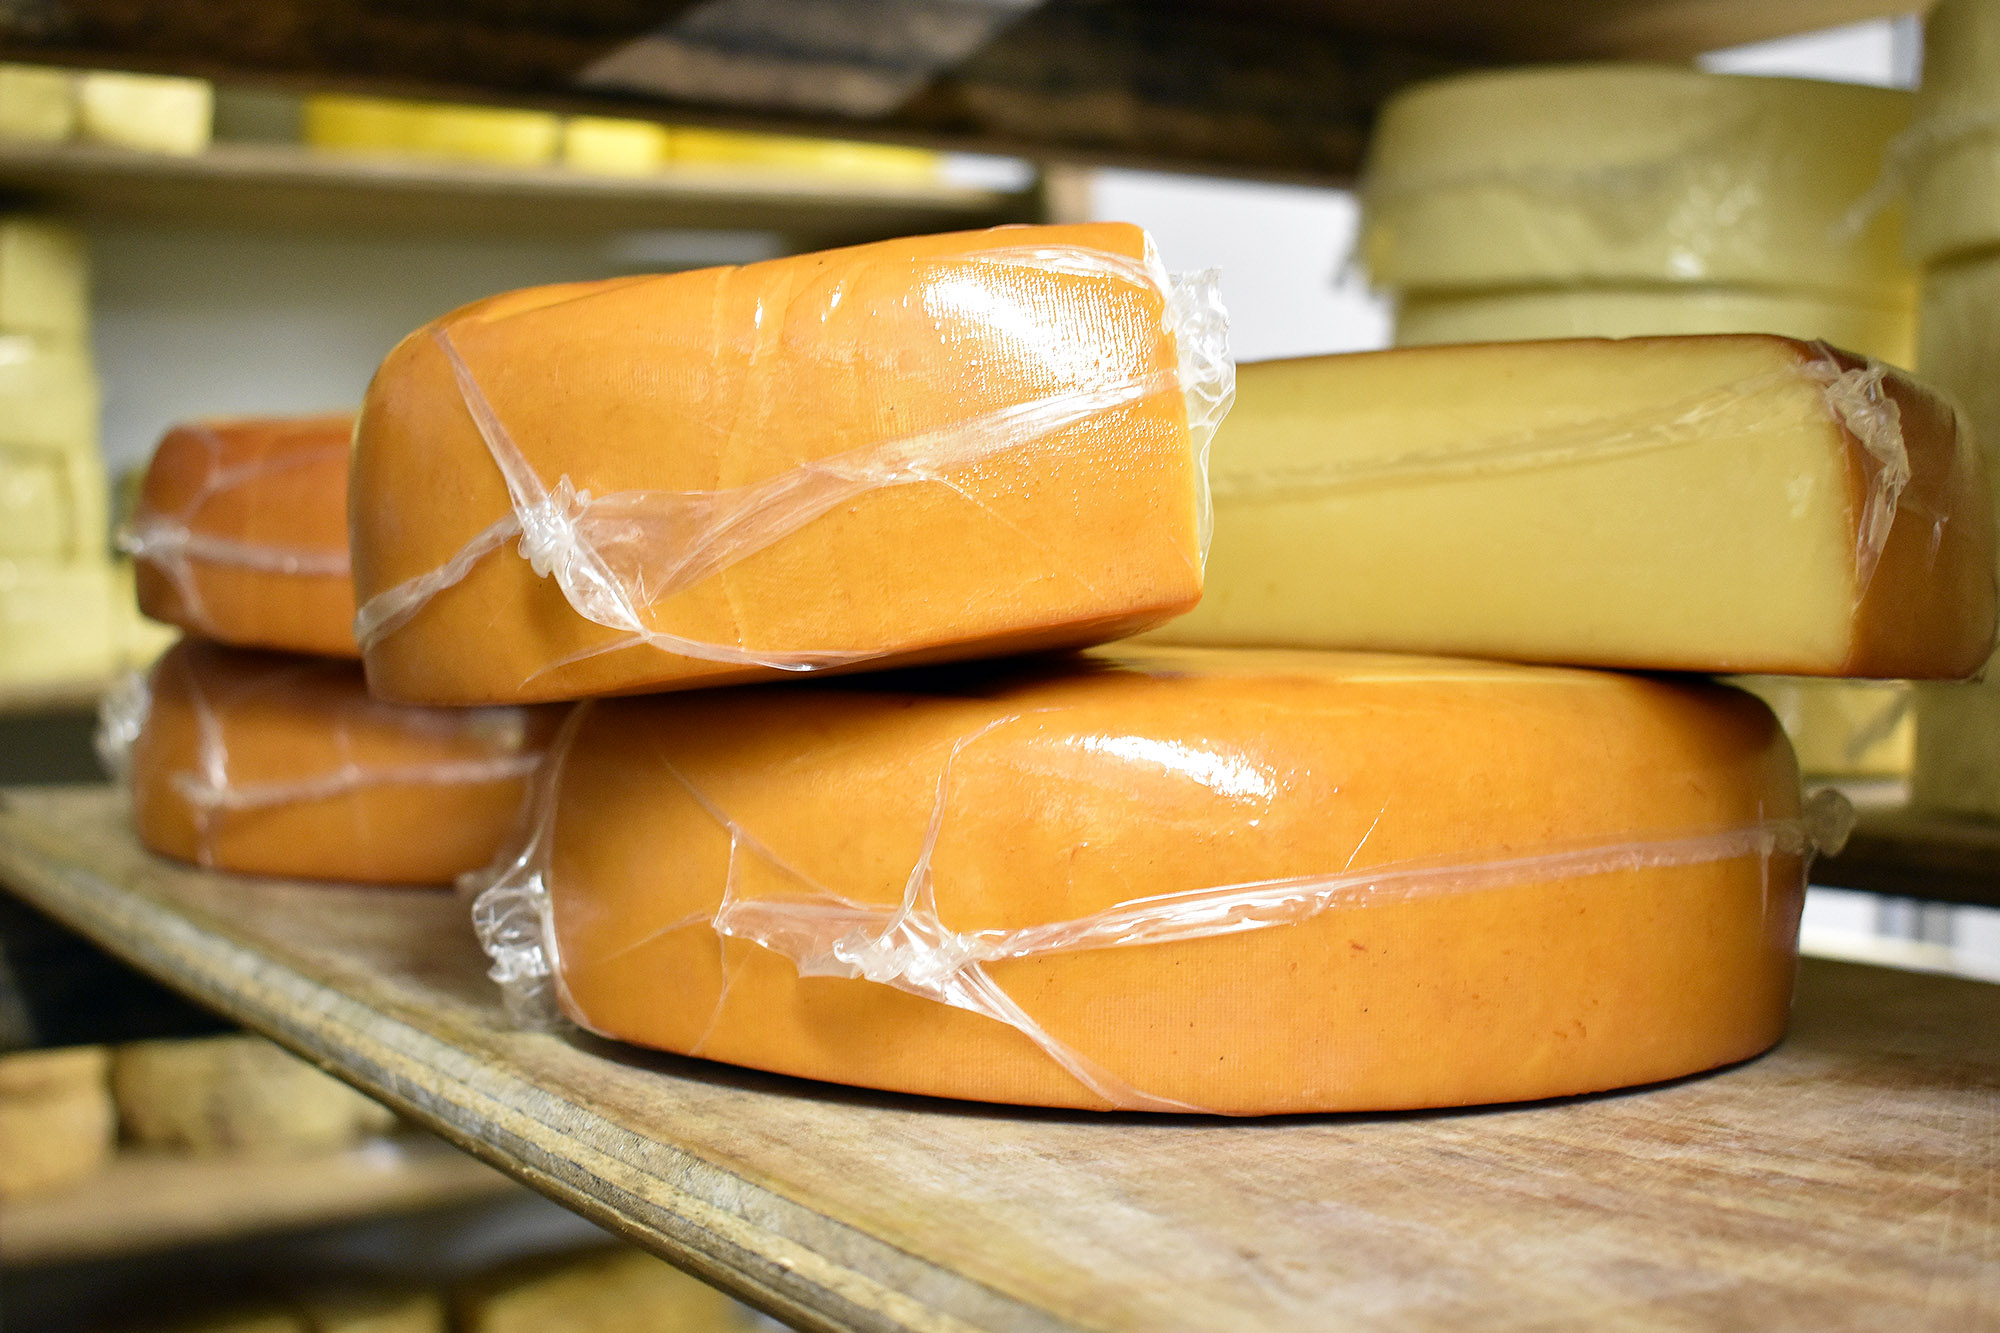 Large circular blocks of cheese